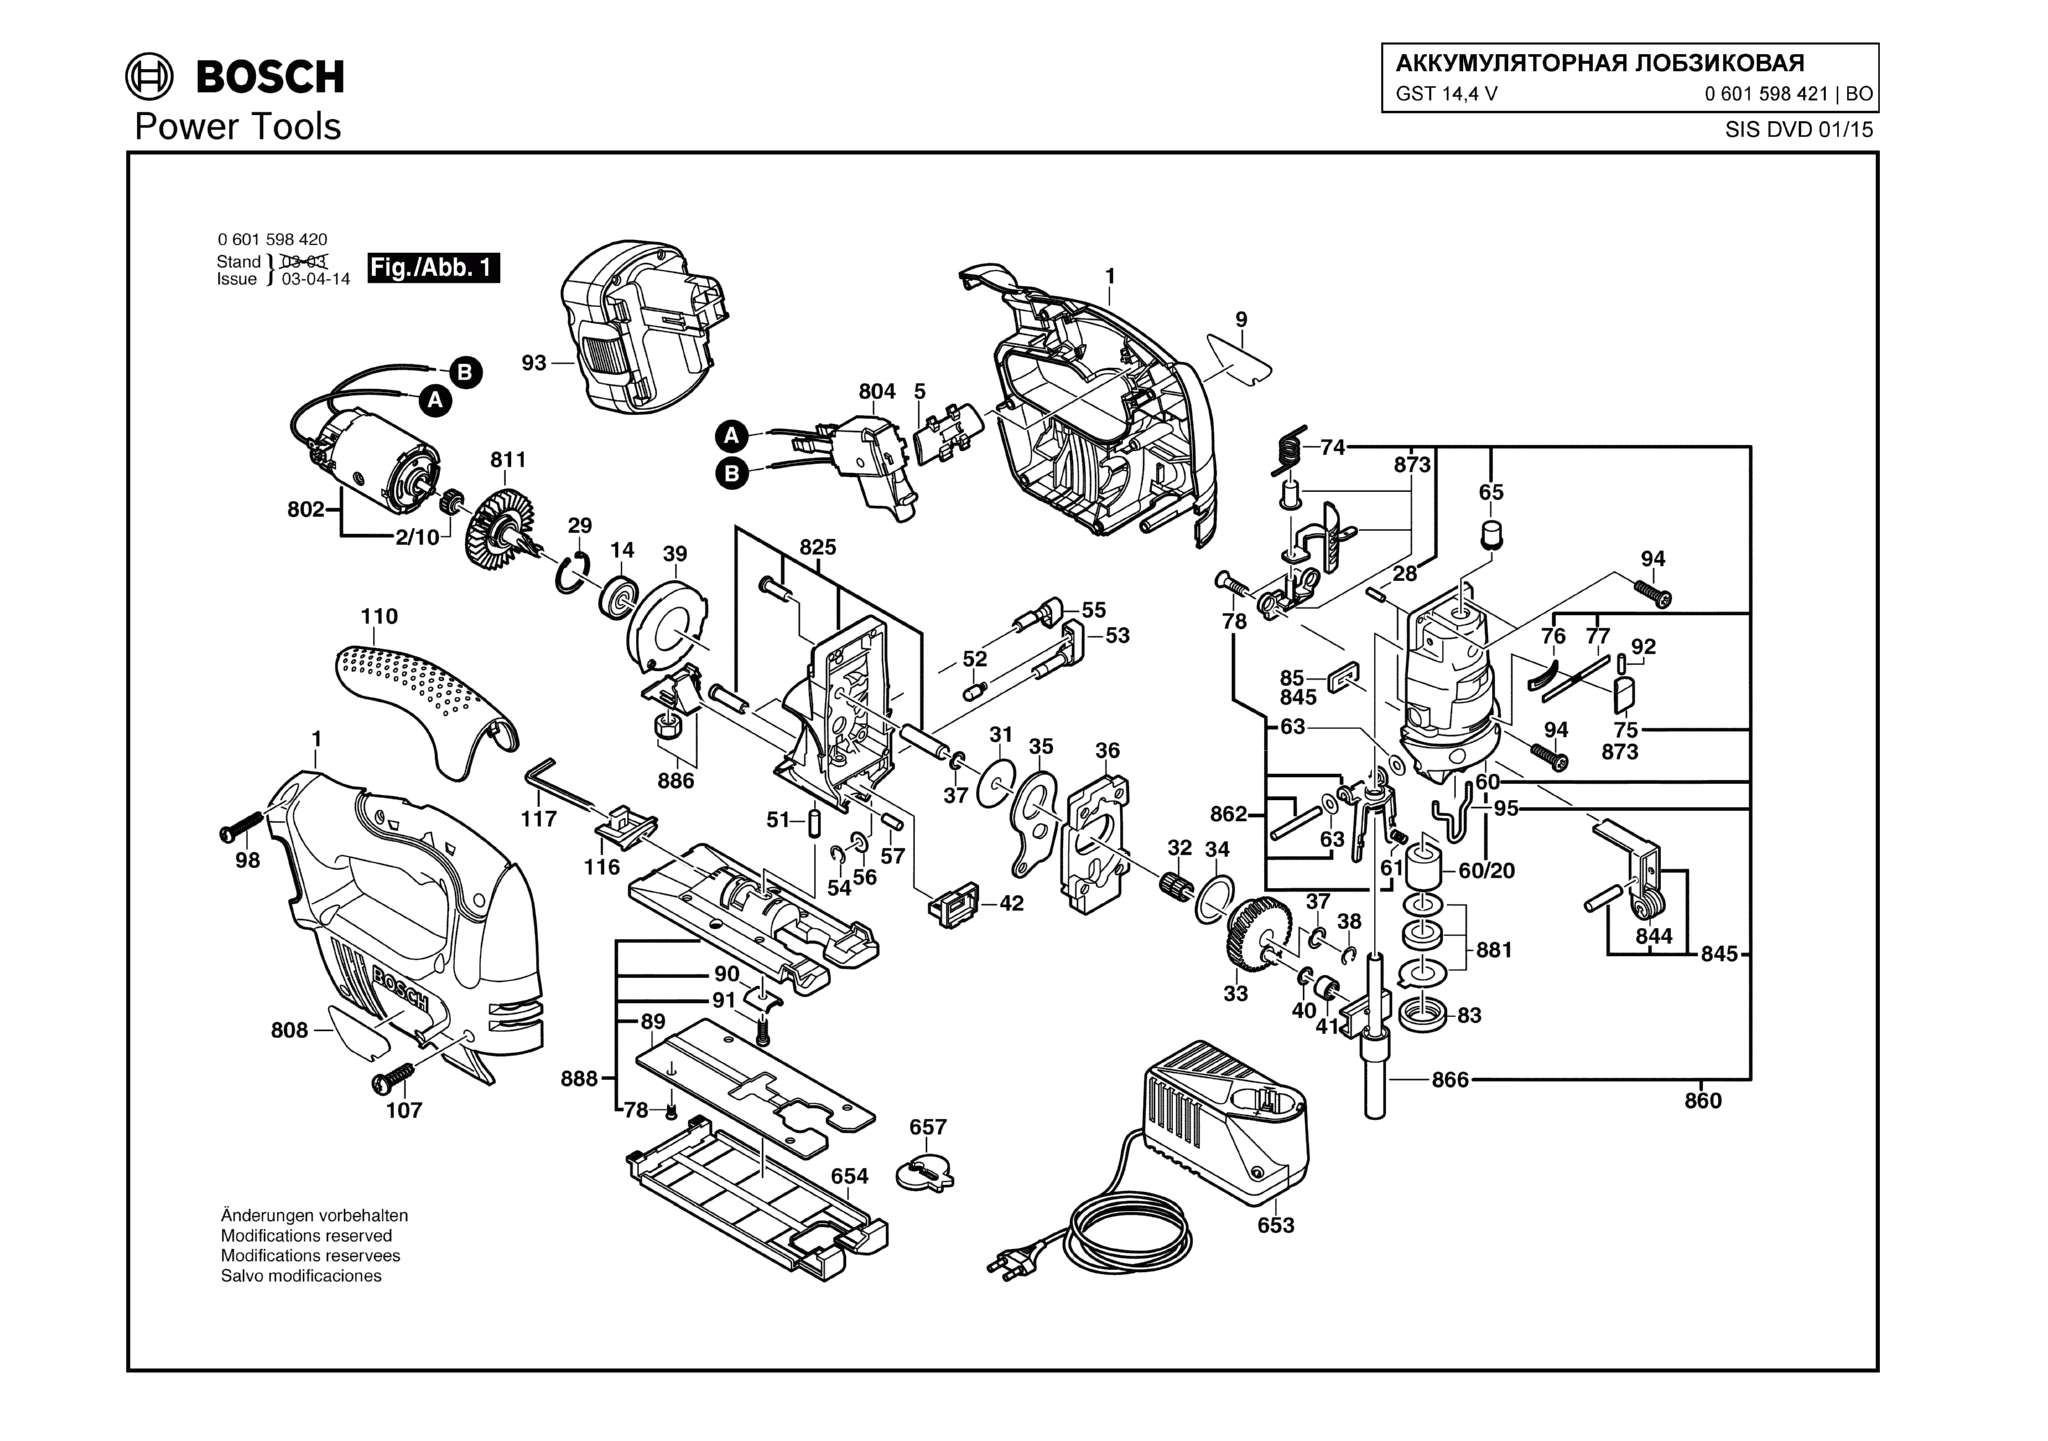 Запчасти, схема и деталировка Bosch GST 14,4 V (ТИП 0601598421)